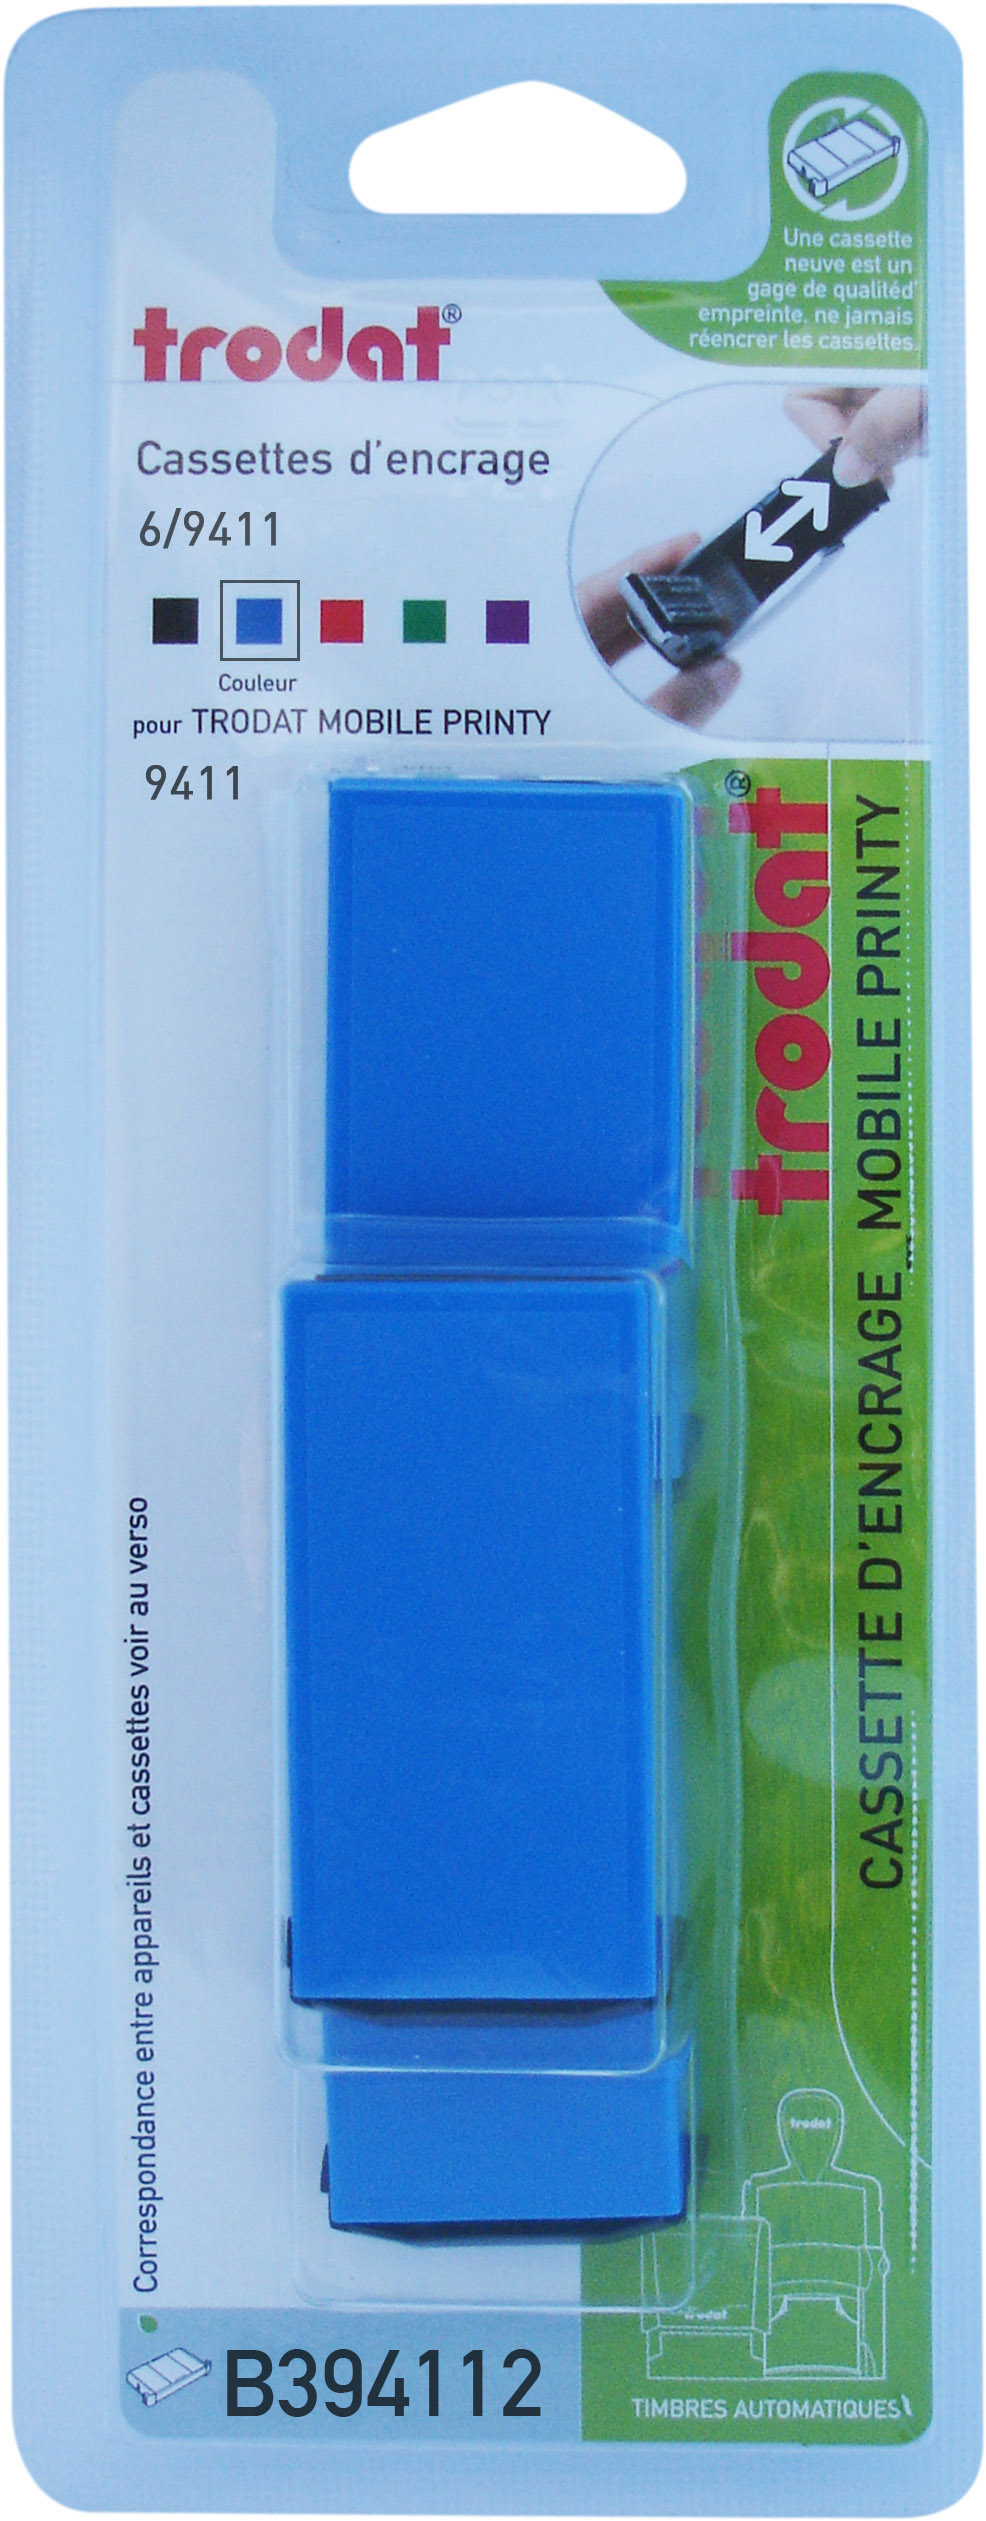 Trodat - 3 Encriers 6/9411 recharges pour tampon Mobile Printy 9411 - bleu